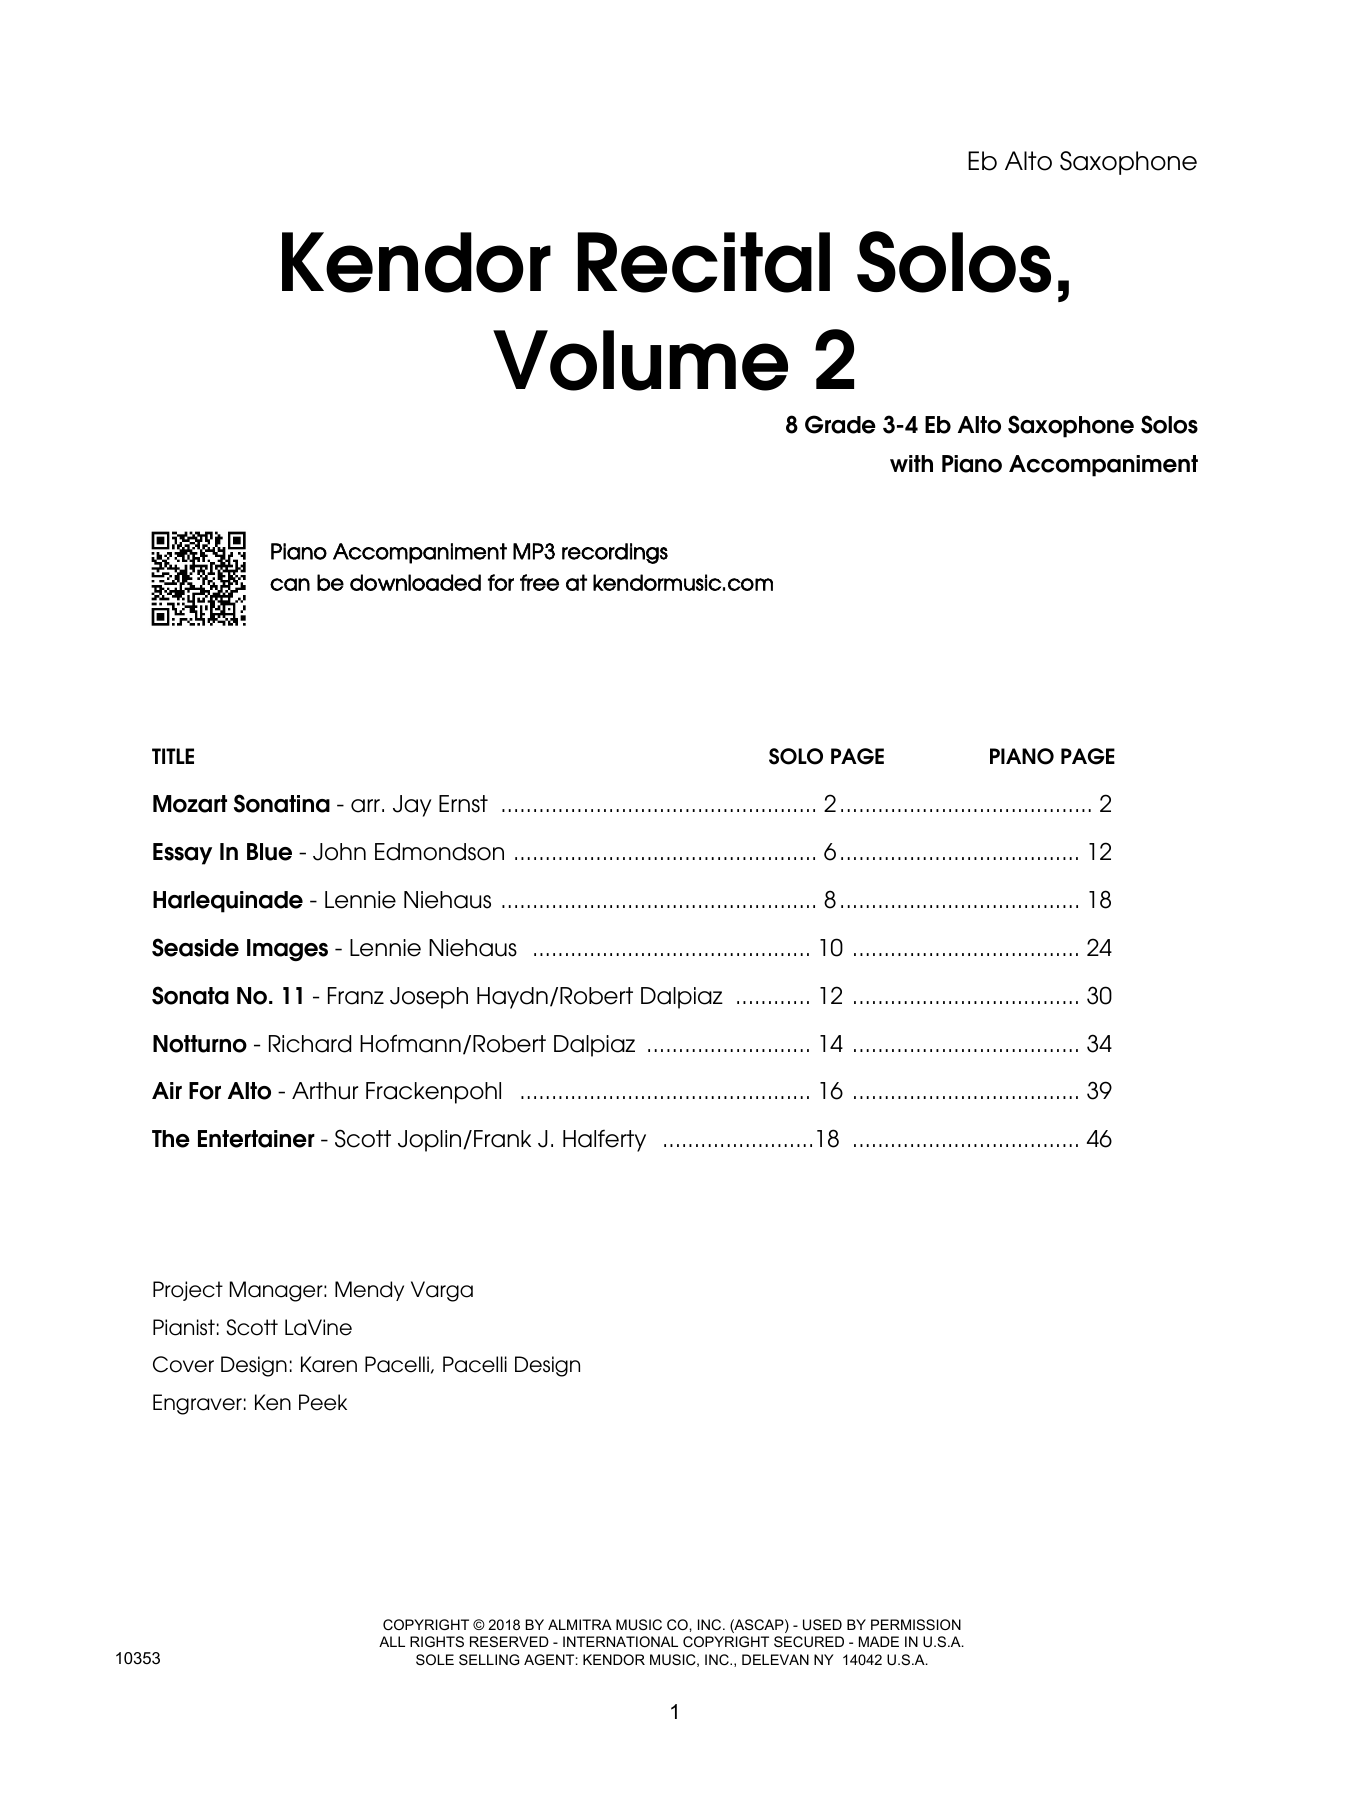 Download Various Kendor Recital Solos, Volume 2 - Eb Alt Sheet Music